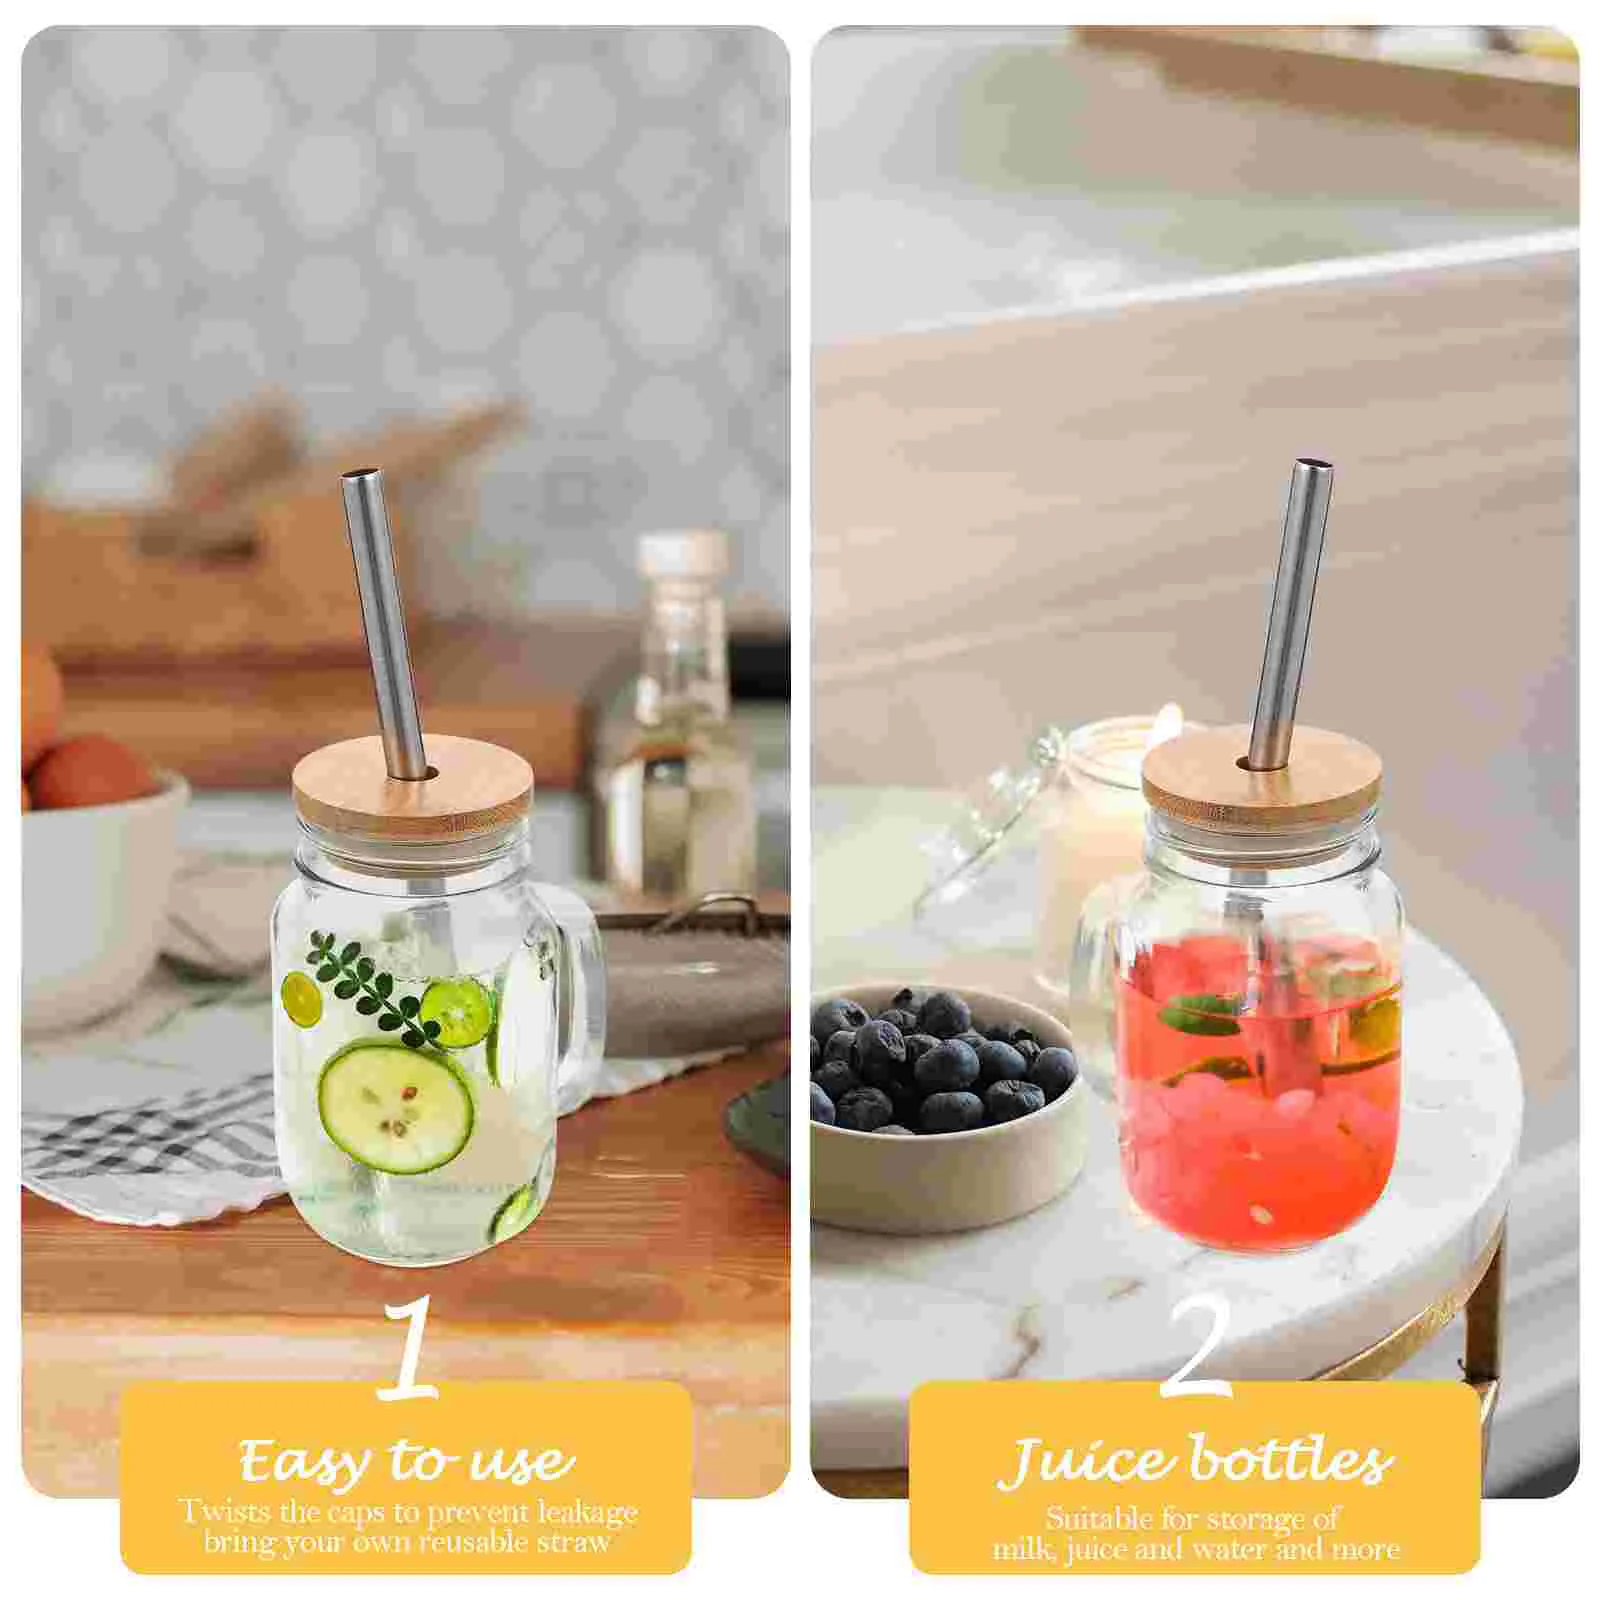 https://ae01.alicdn.com/kf/S43bfcd22bf6c4afeaaf947fc3ac6748bU/Mason-Cups-Cup-Jar-Drinking-Glasses-Water-Lids-Lid-Jars-Coffee-Straw-Bottle-Mugs-Straws-Smoothie.jpg